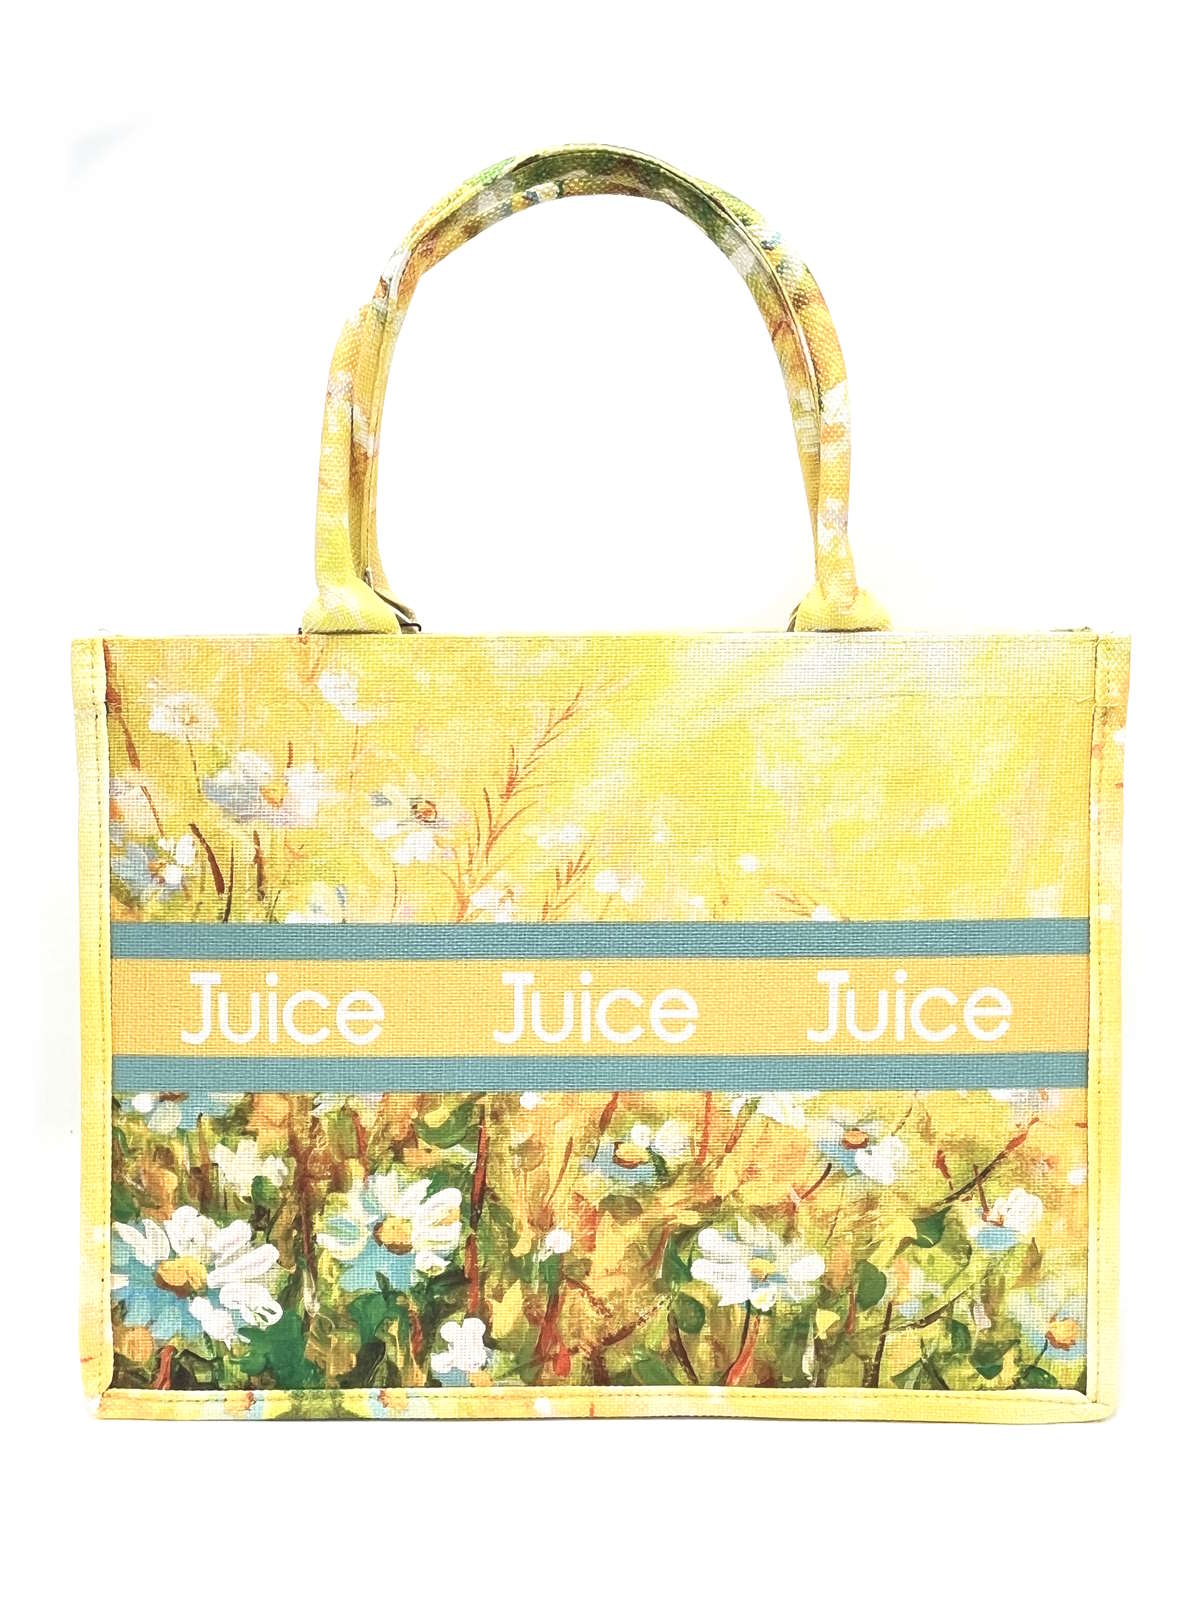 Brand Juice, Shopping bag, art. 231062.155